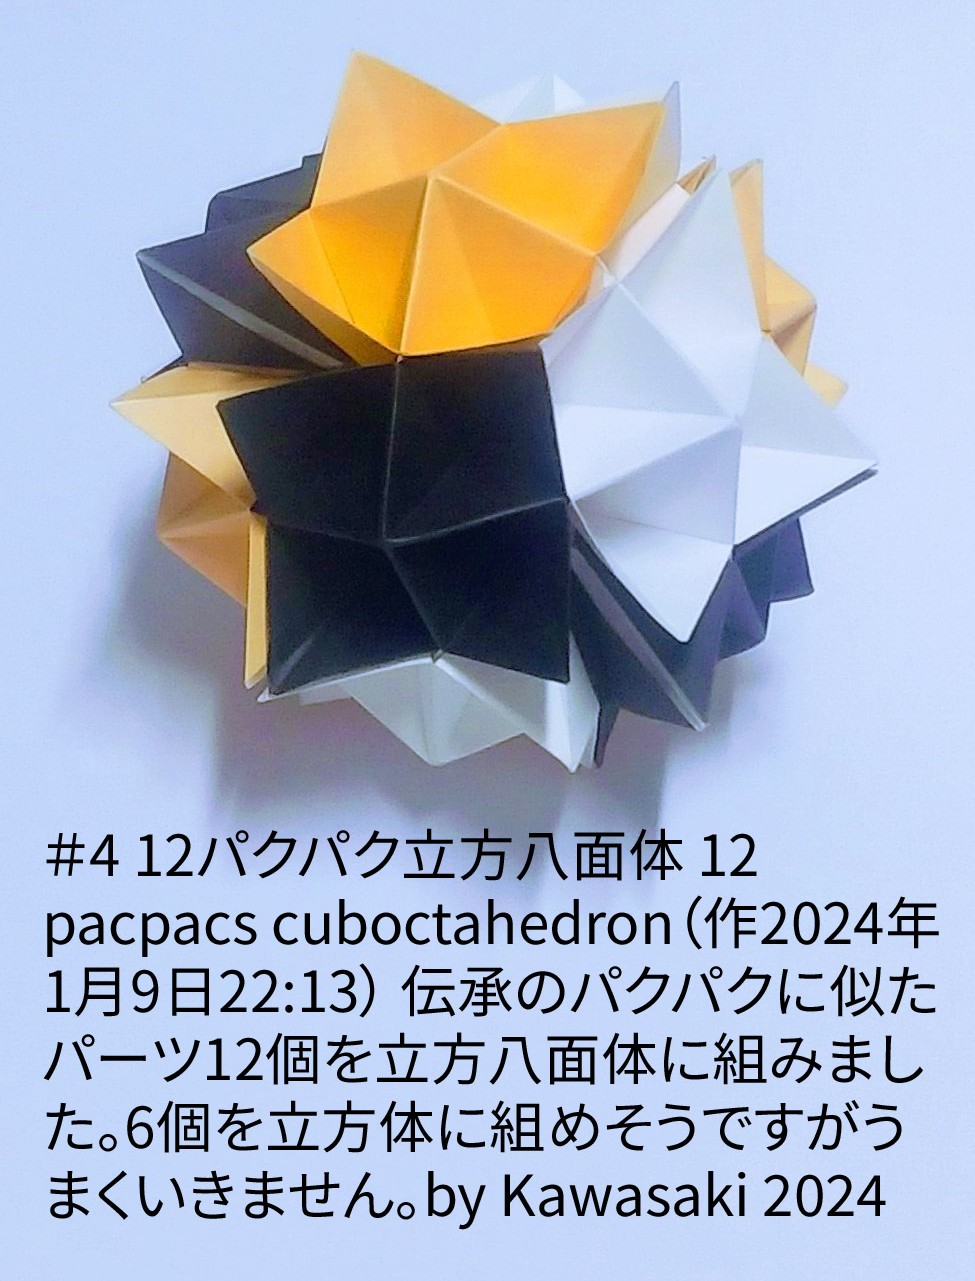 2024/01/09(Tue) 22:43「＃4 12パクパク立方八面体 12 pacpacs cuboctahedron（作2024年1月9日22:13）」川崎敏和 T.Kawasaki
（創作者 Author：川崎敏和 T.Kawasaki,　製作者 Folder：川崎敏和 T.Kawasaki ,　出典 Source：2024年川崎敏和折り紙キット＃4）
 伝承のパクパクに似たパーツ12個を立方八面体に組みました。6個を立方体に組めそうですがうまくいきません。by Kawasaki 2024